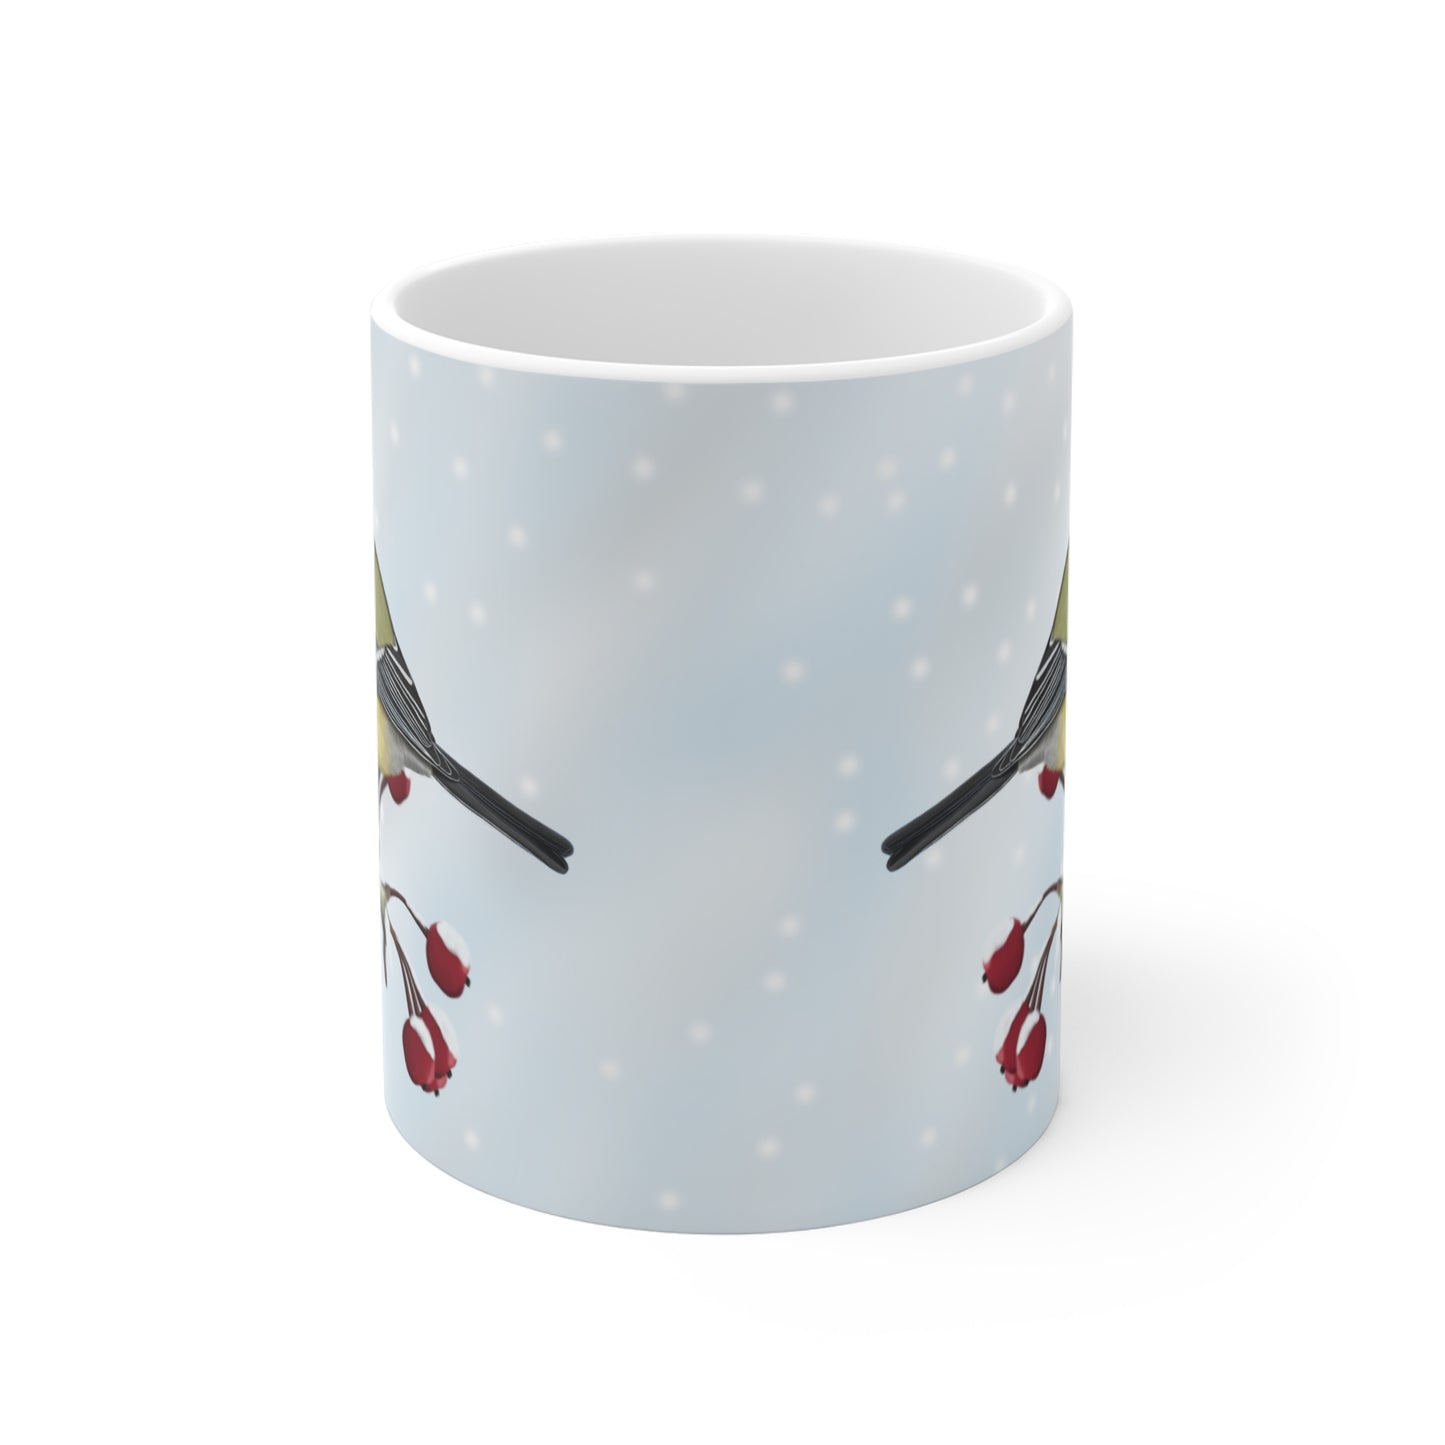 Chickadee Winter Bird Ceramic Mug 11oz